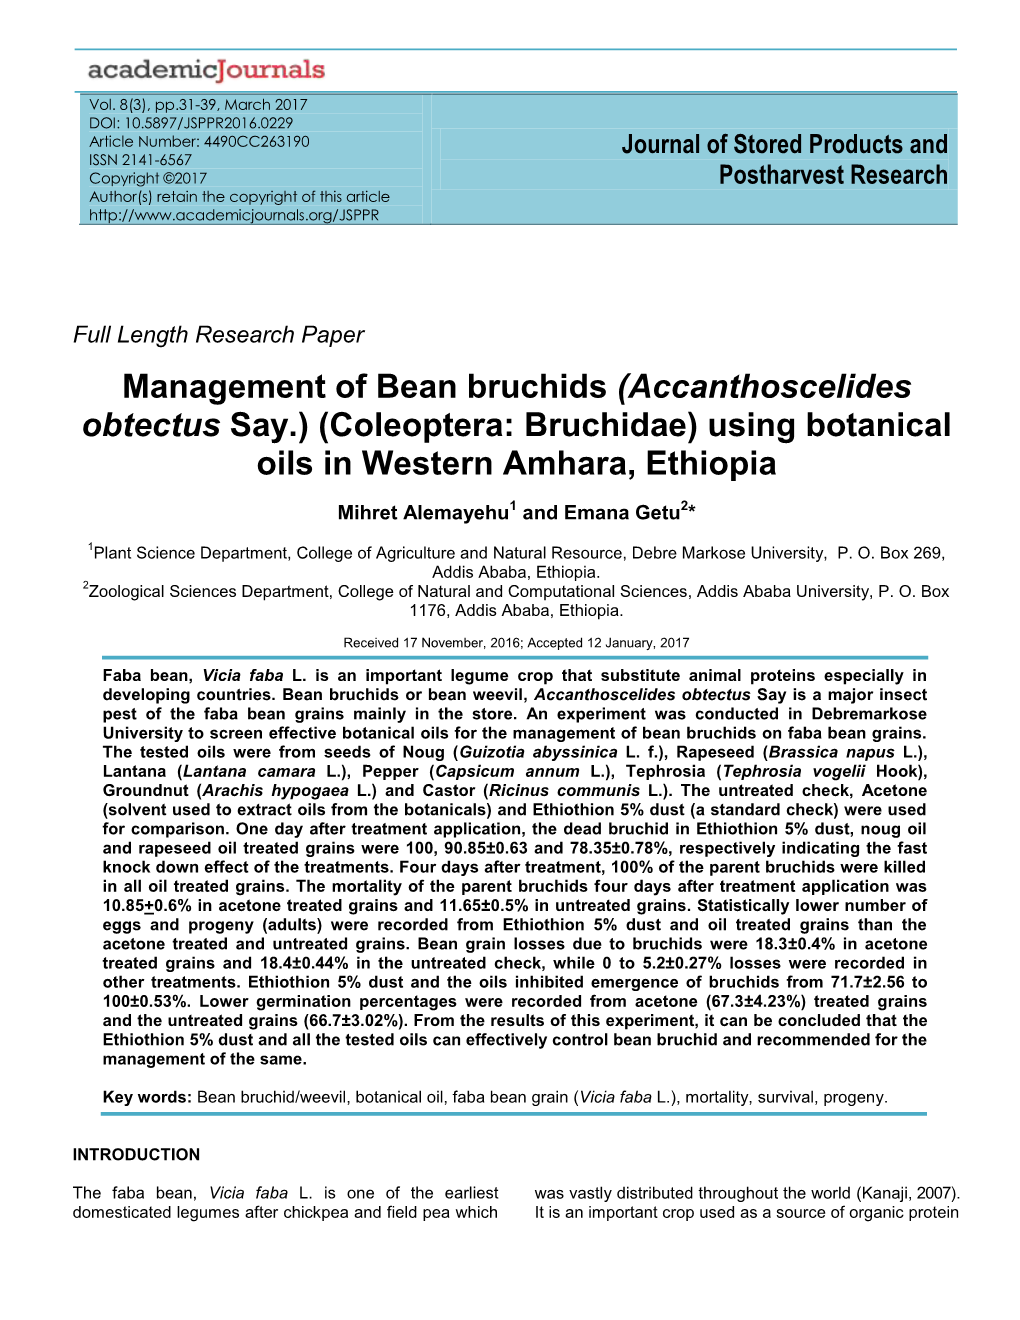 Management of Bean Bruchids (Accanthoscelides Obtectus Say.) (Coleoptera: Bruchidae) Using Botanical Oils in Western Amhara, Ethiopia